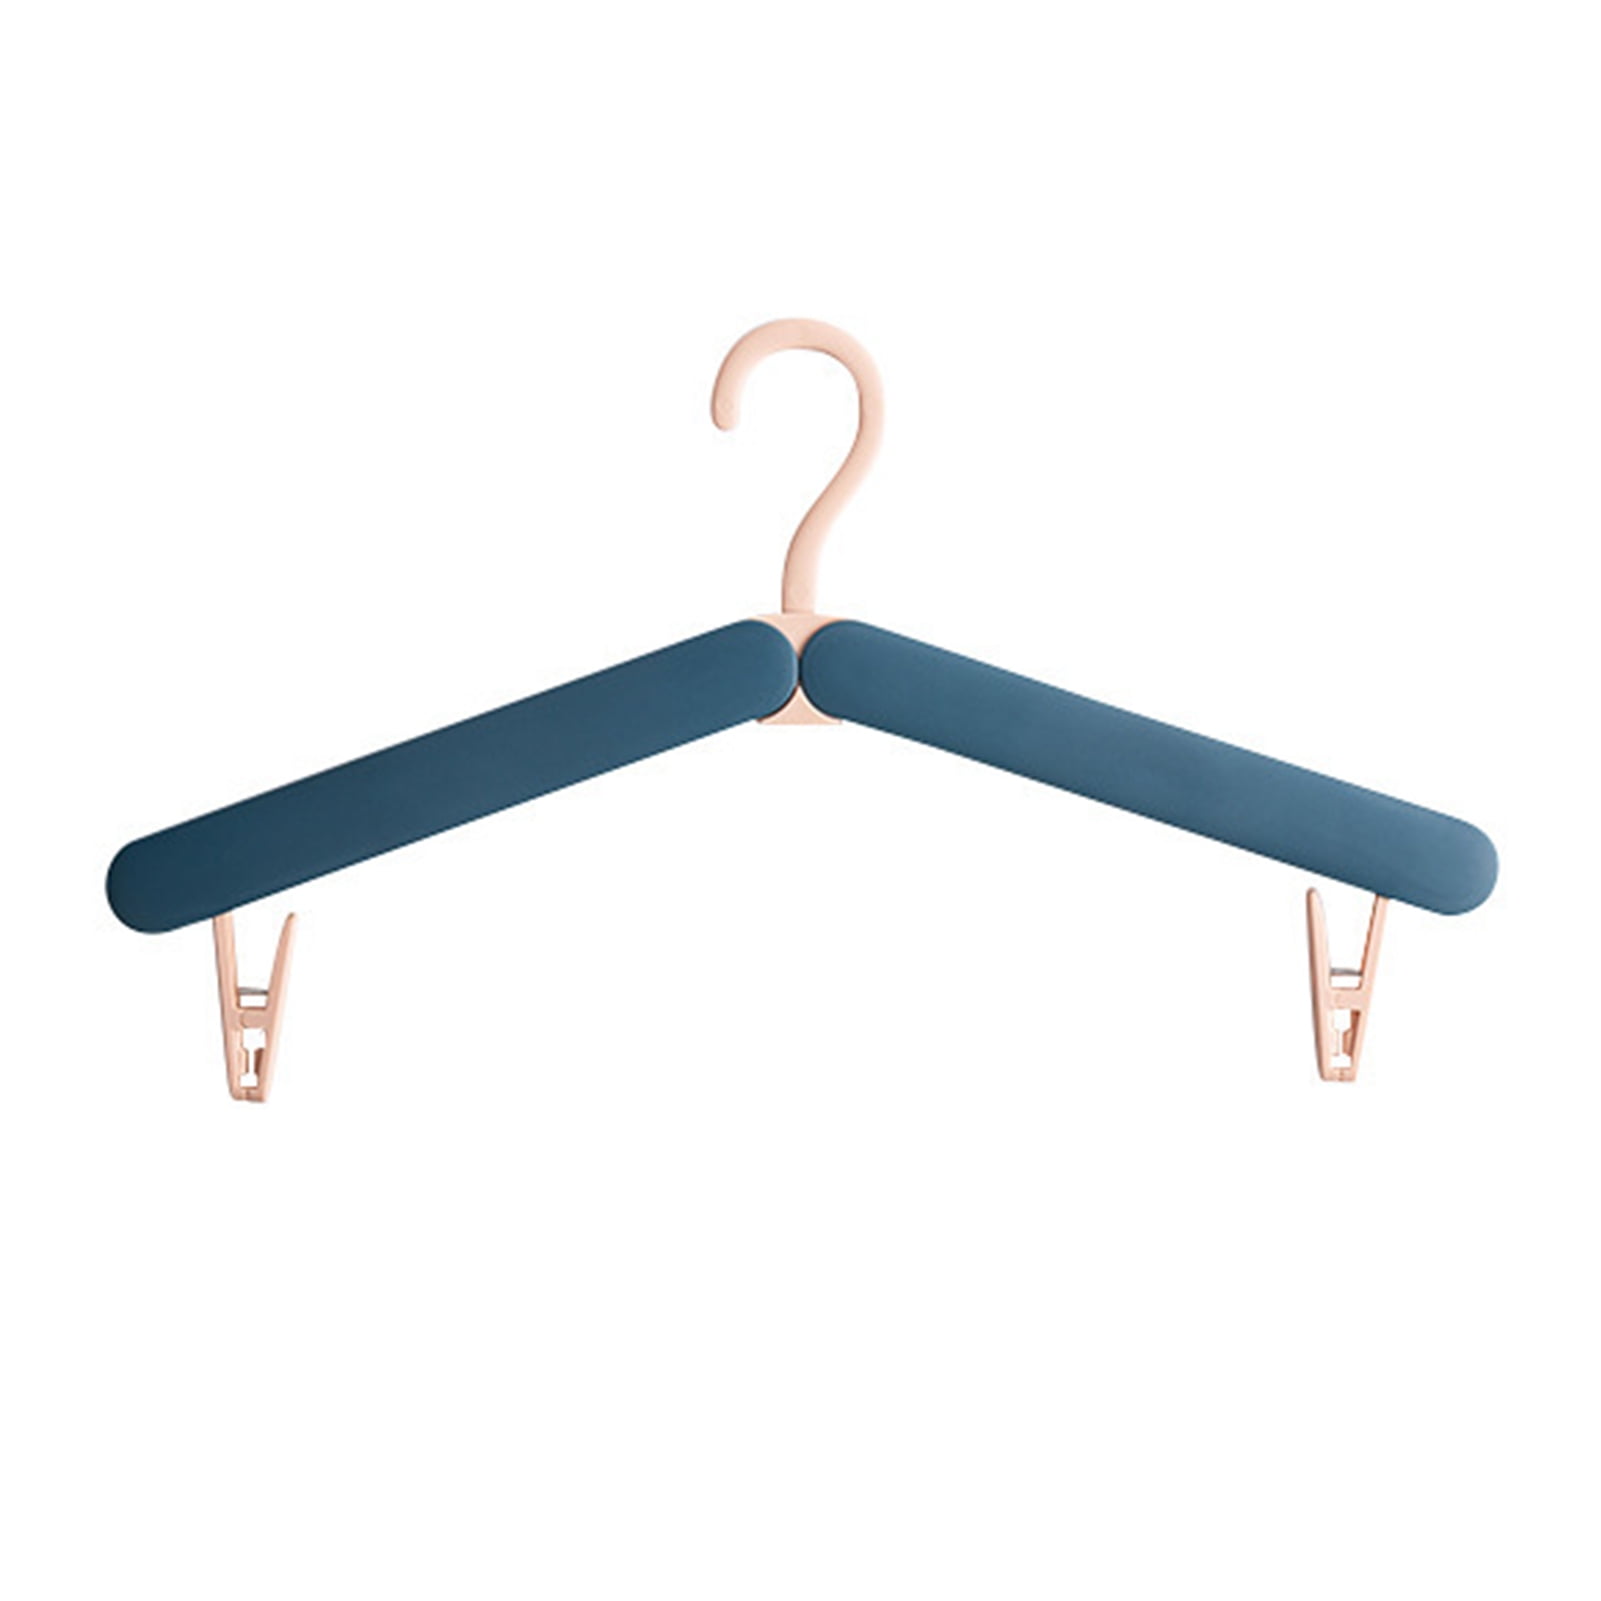 Portable & Foldable The Hanger Store 5 Grey Travel Coat Hangers Folding Design with Skirt Trouser Clips 